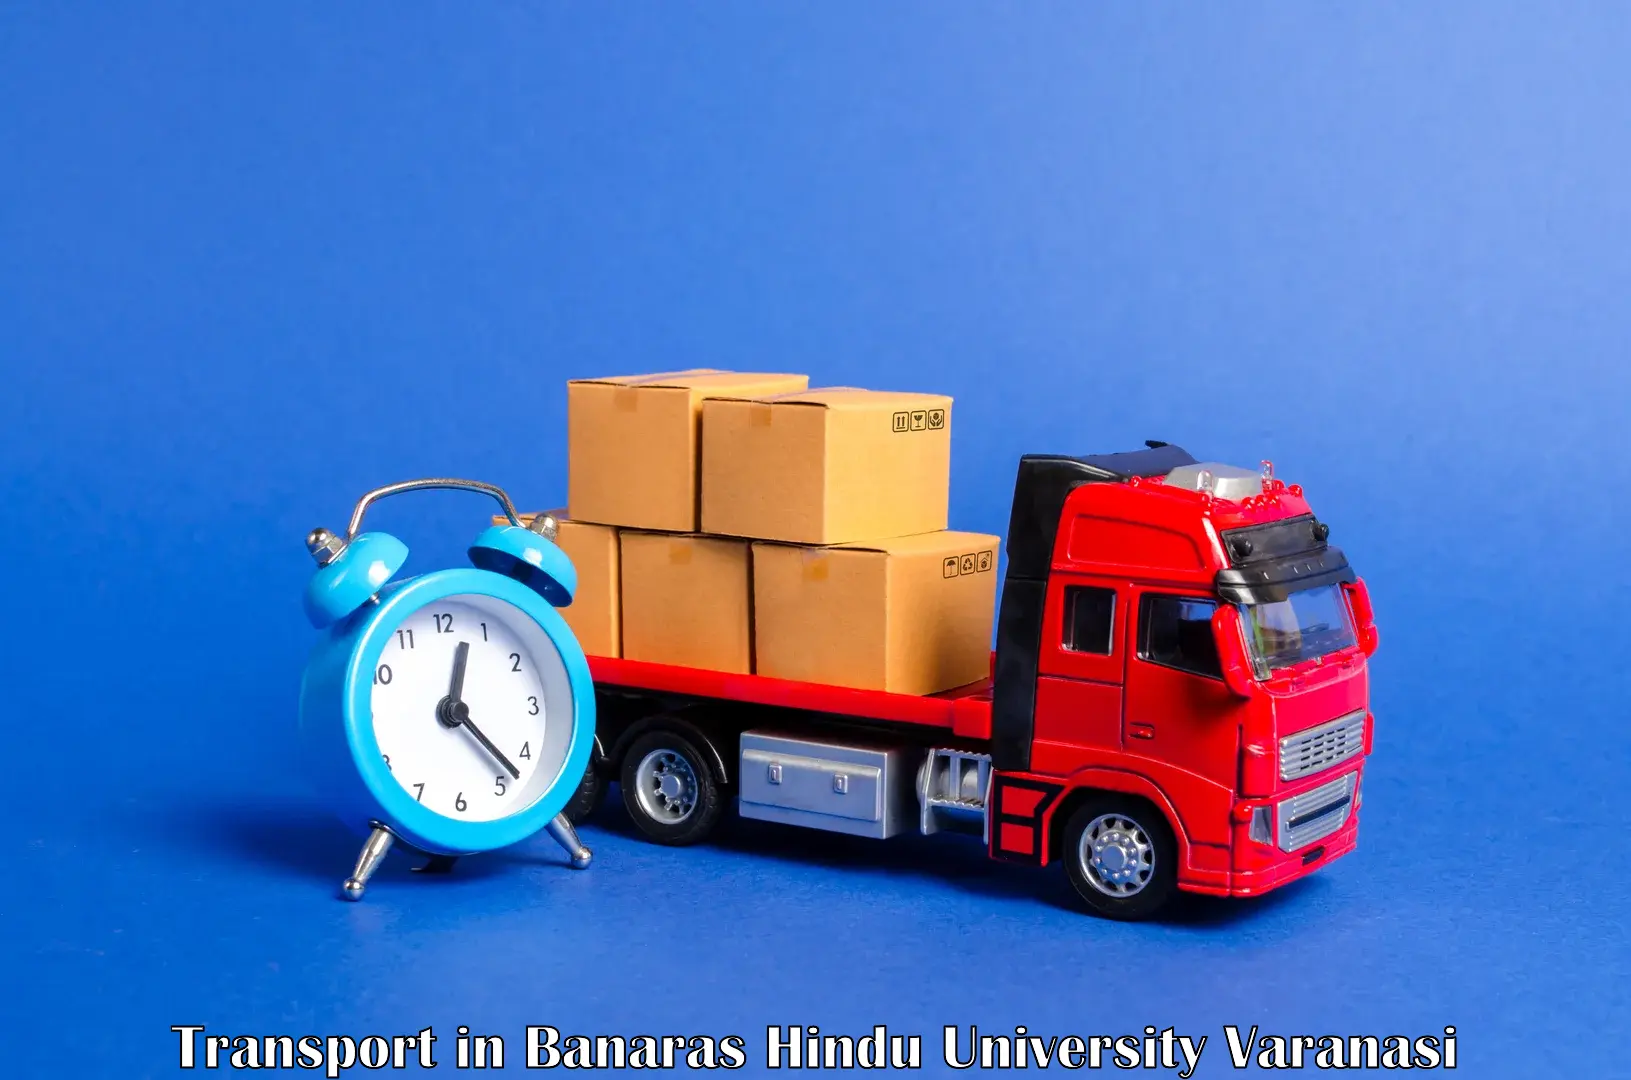 Vehicle courier services in Banaras Hindu University Varanasi